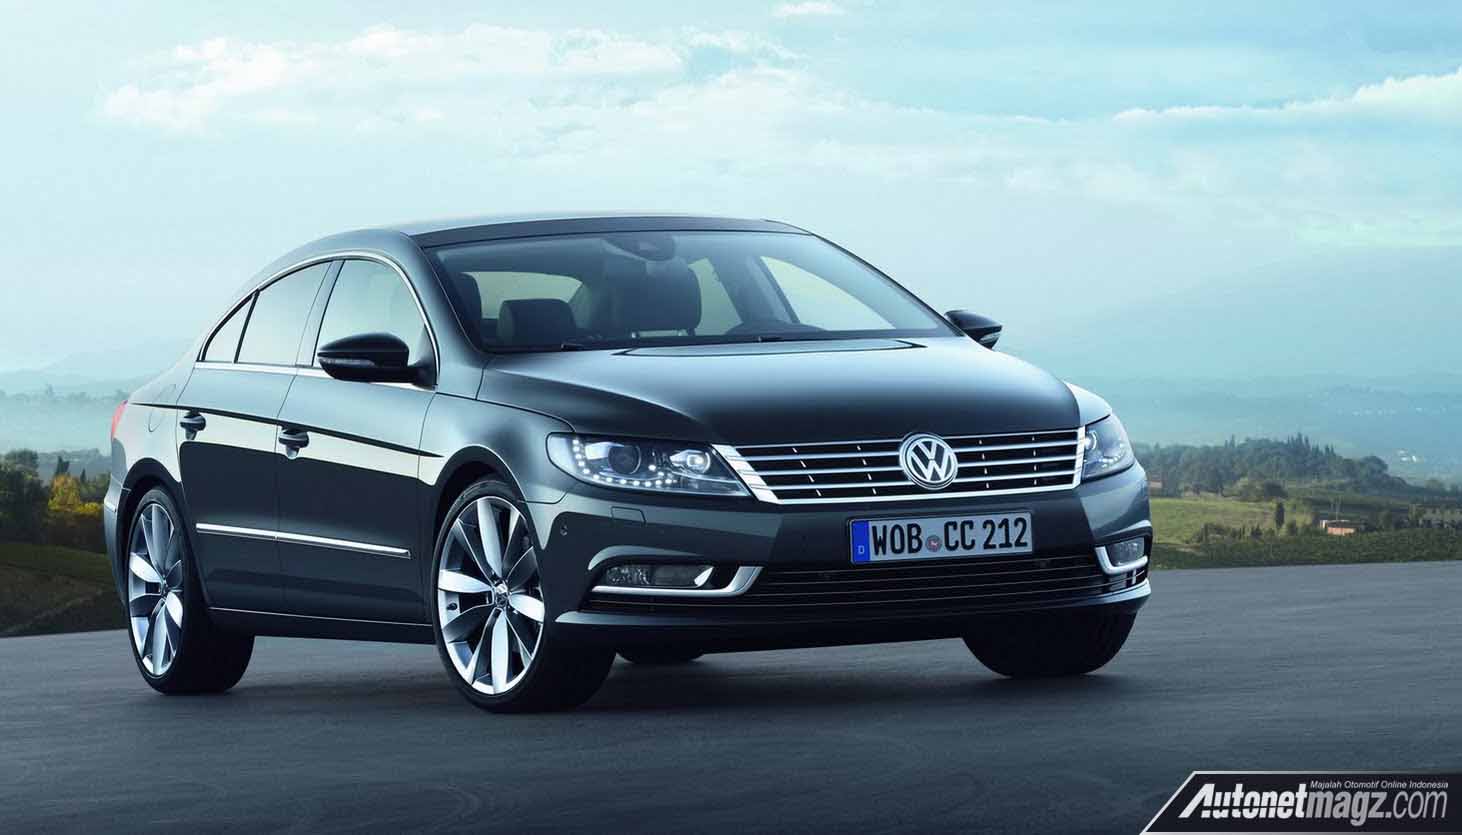 Berita, Volkswagen Passat Sedan: Masalah Pompa Bahan Bakar, Volkswagen Recall 280 Ribu Mobil